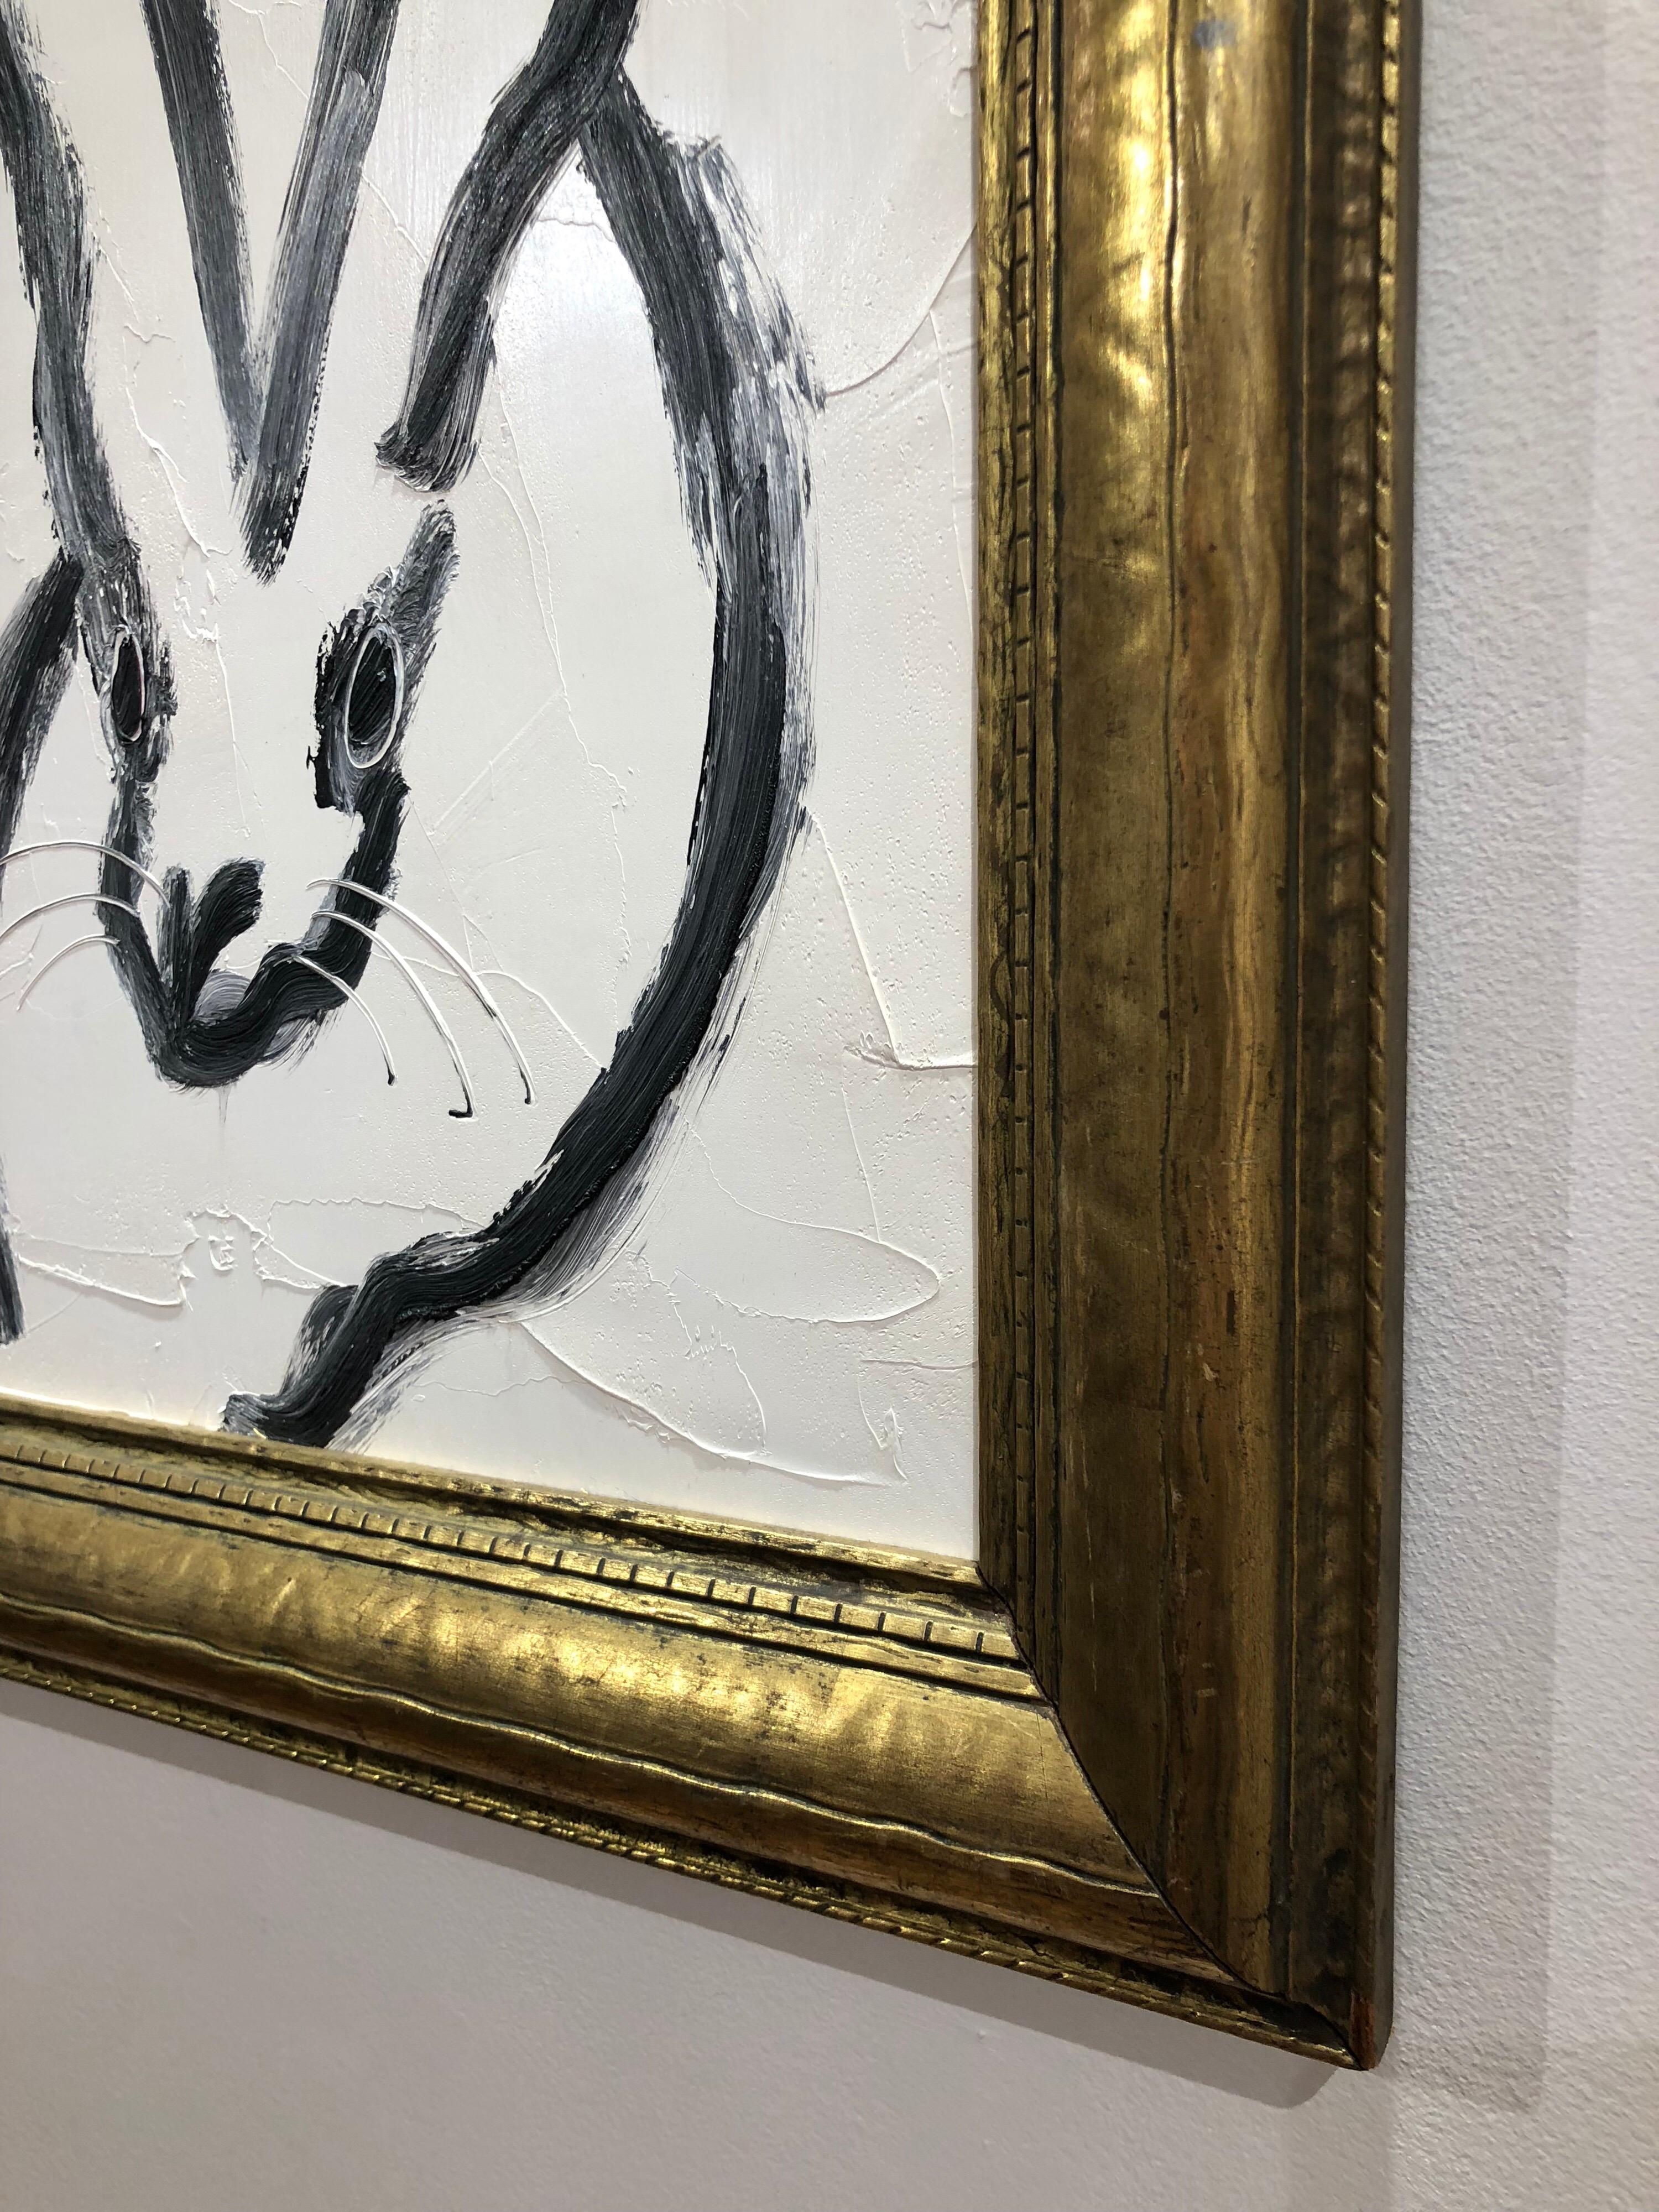 Artist:  Slonem, Hunt
Title:  White Bunny
Series:  Bunnies
Date:  2018
Medium:  Oil on panel
Unframed Dimensions:  20